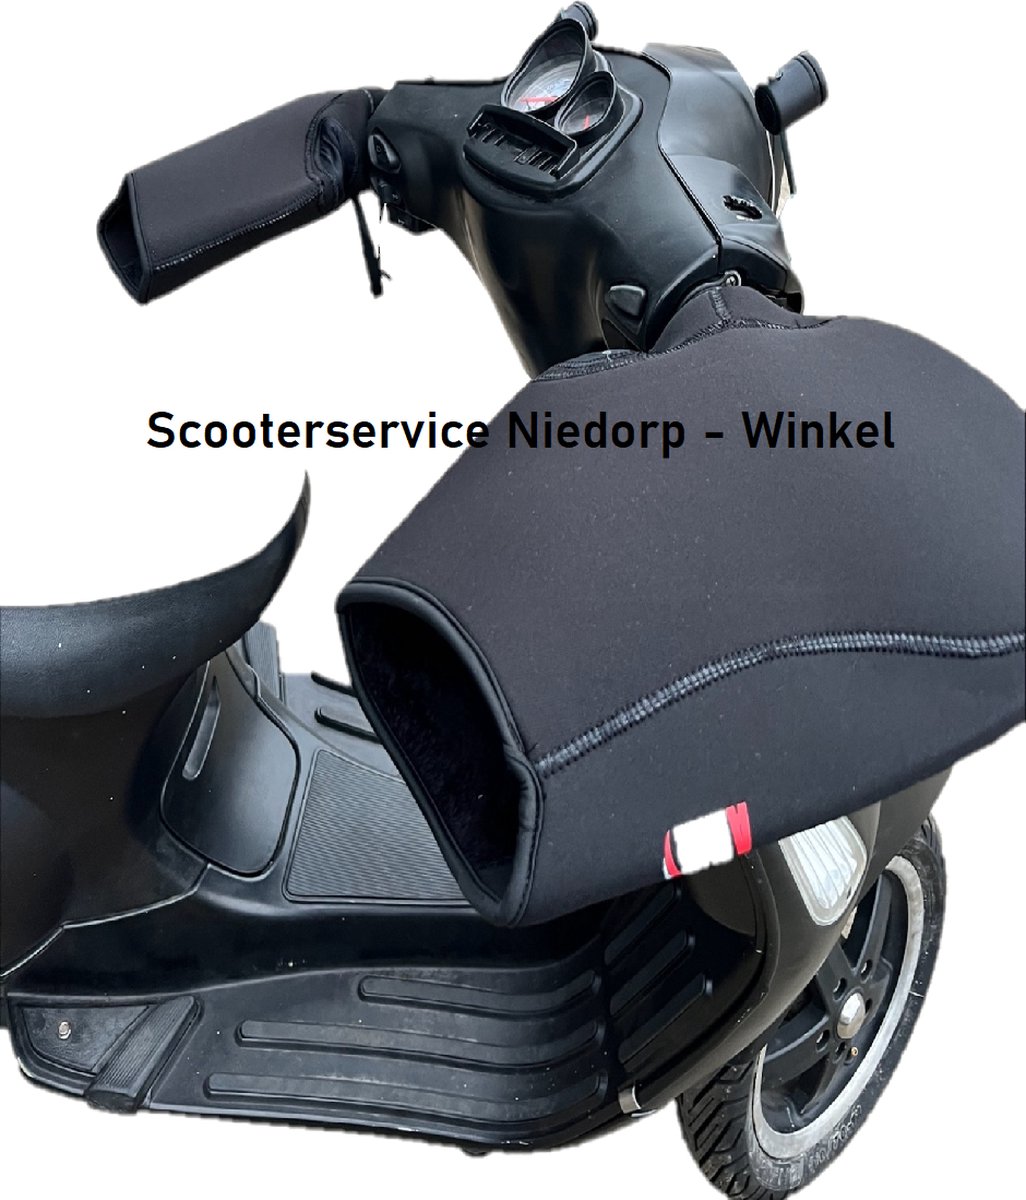 Gant de guidon pour moto, scooter ou vélo